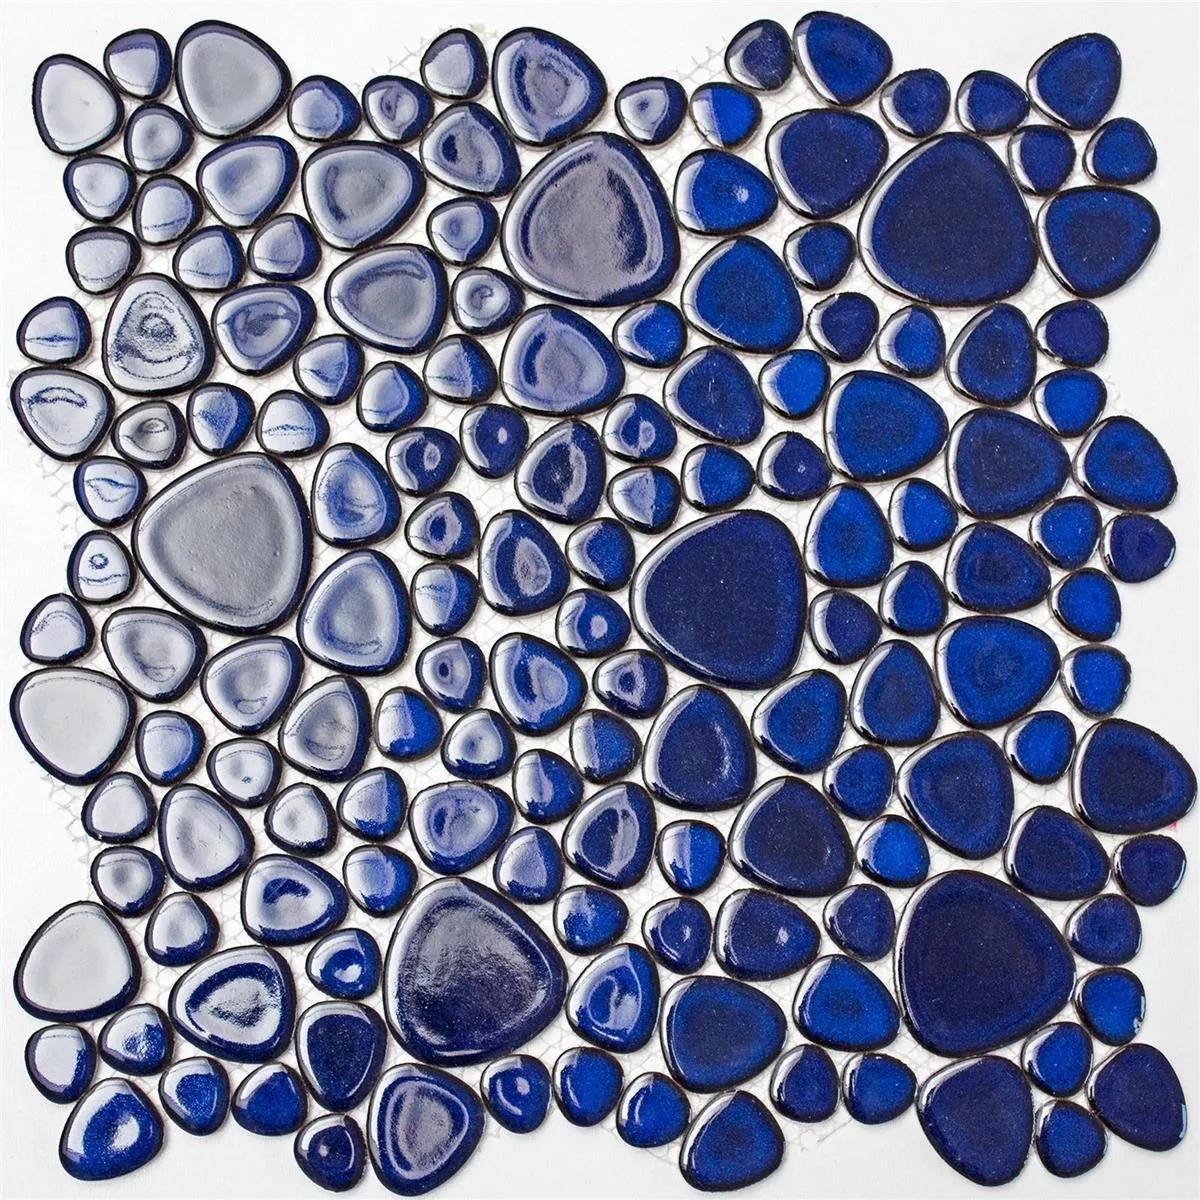 Sample Mosaic Tiles Ceramic Pebble Optic Dark Blue